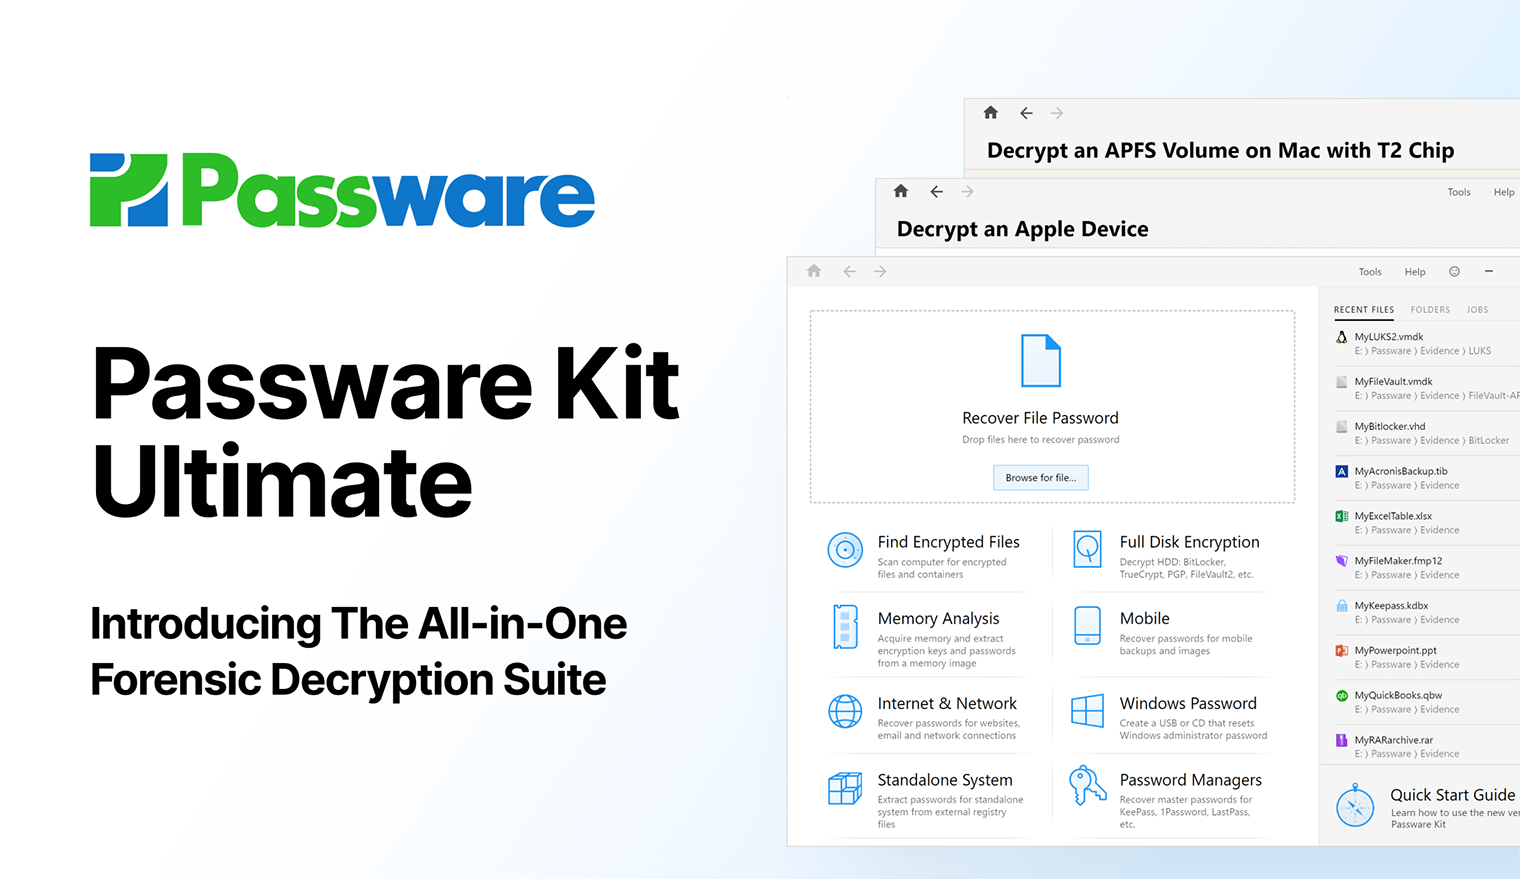 Passware Kit Ultimate